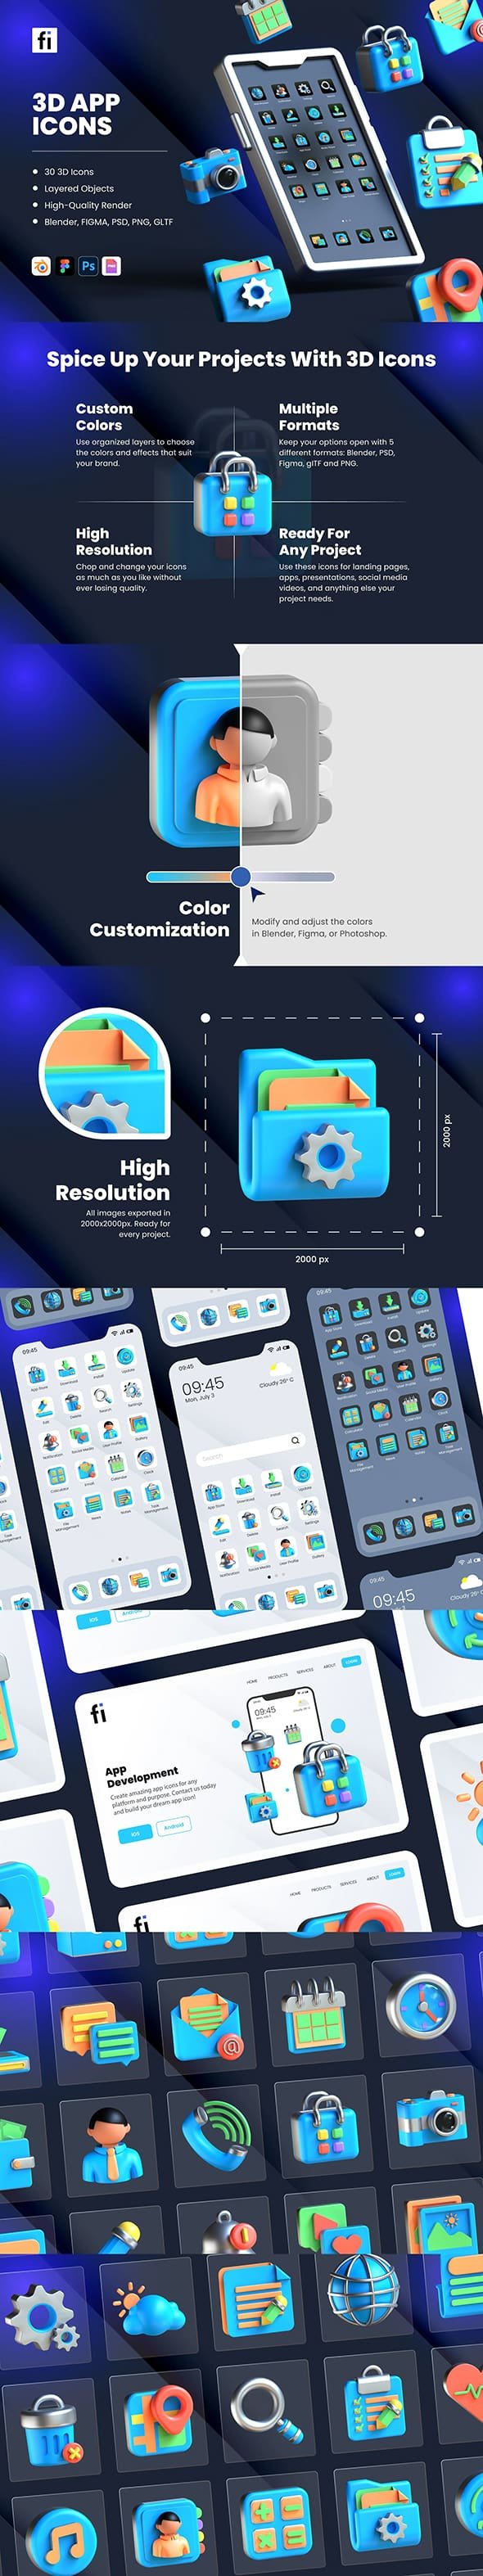 FlatIcons - 3D App Icon Set